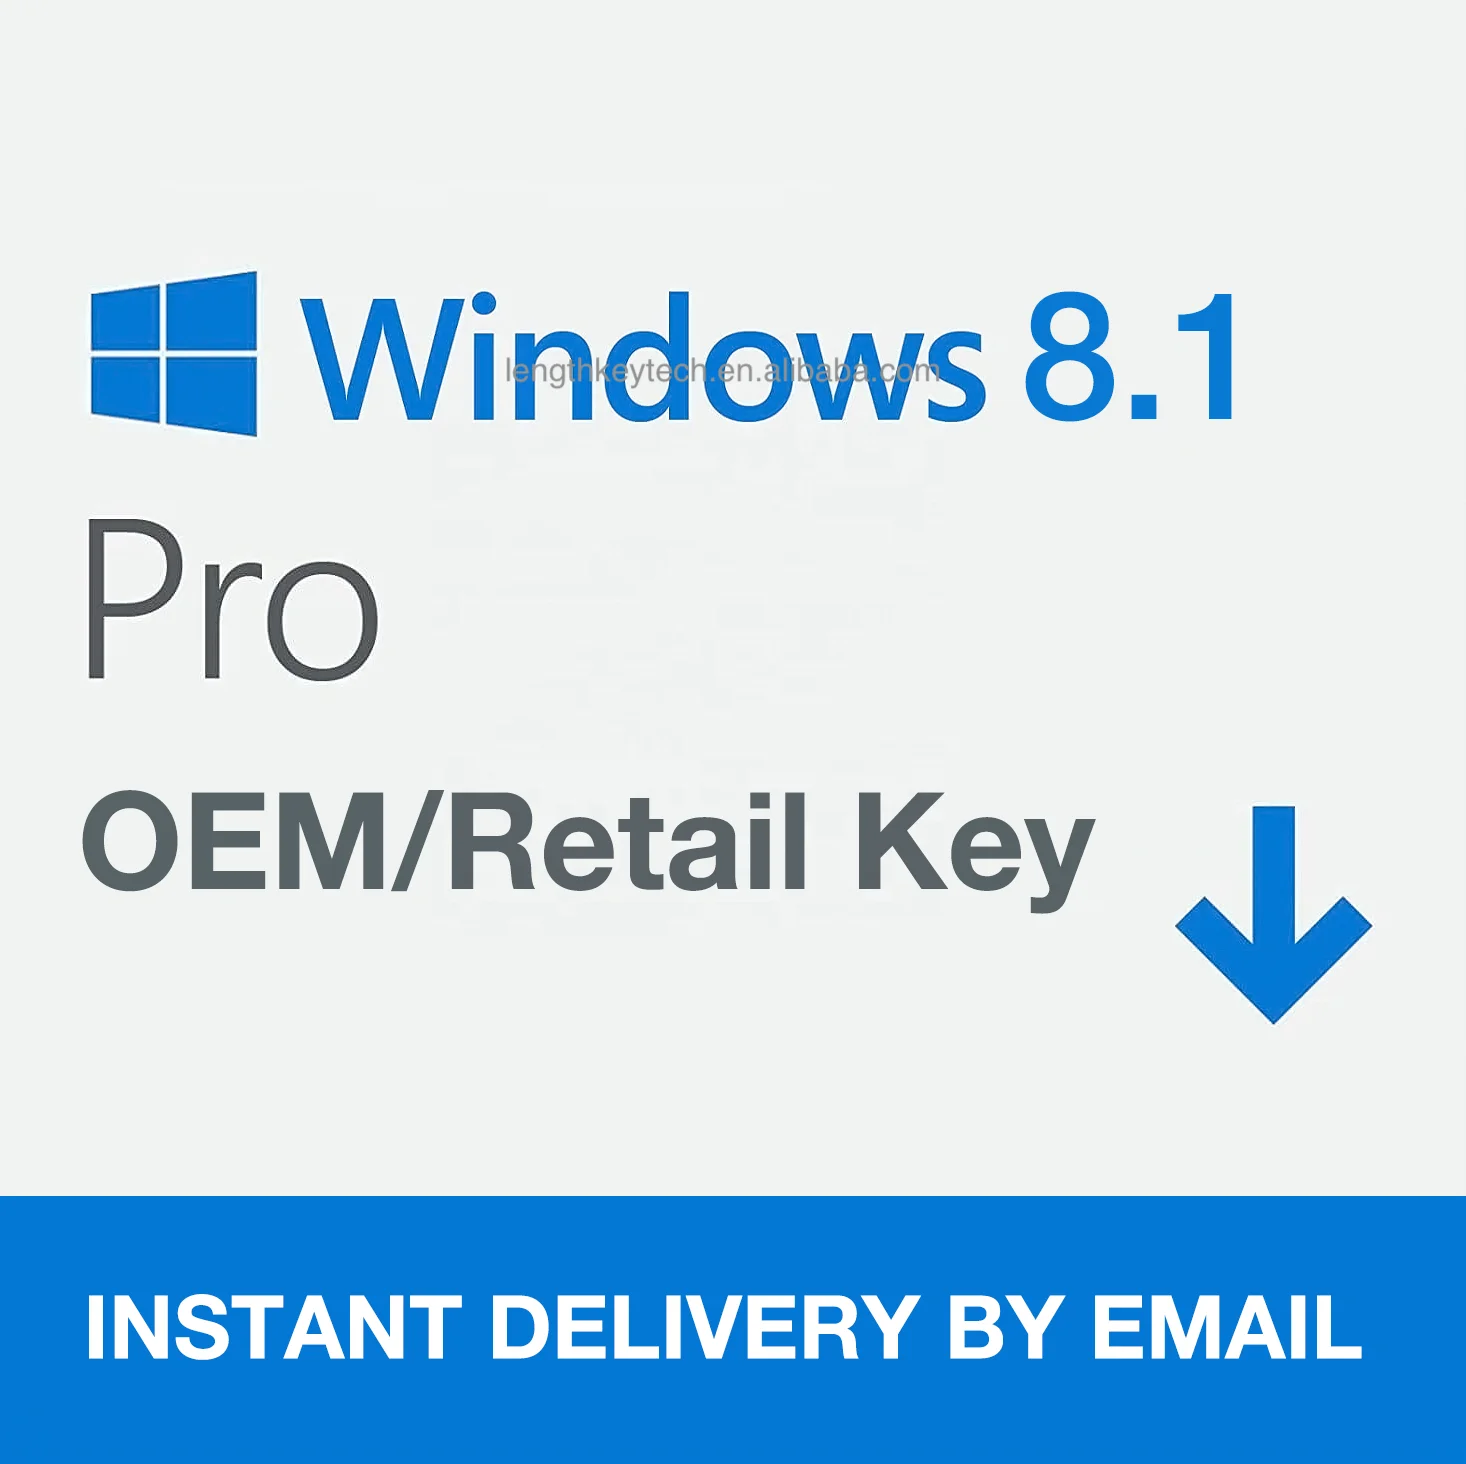 

Online 24 hours Ready Stock Email Delivery Win 8.1 Pro Key Windows 8.1 Pro Key Digital Key 64bit/32 Bit Just Key Code